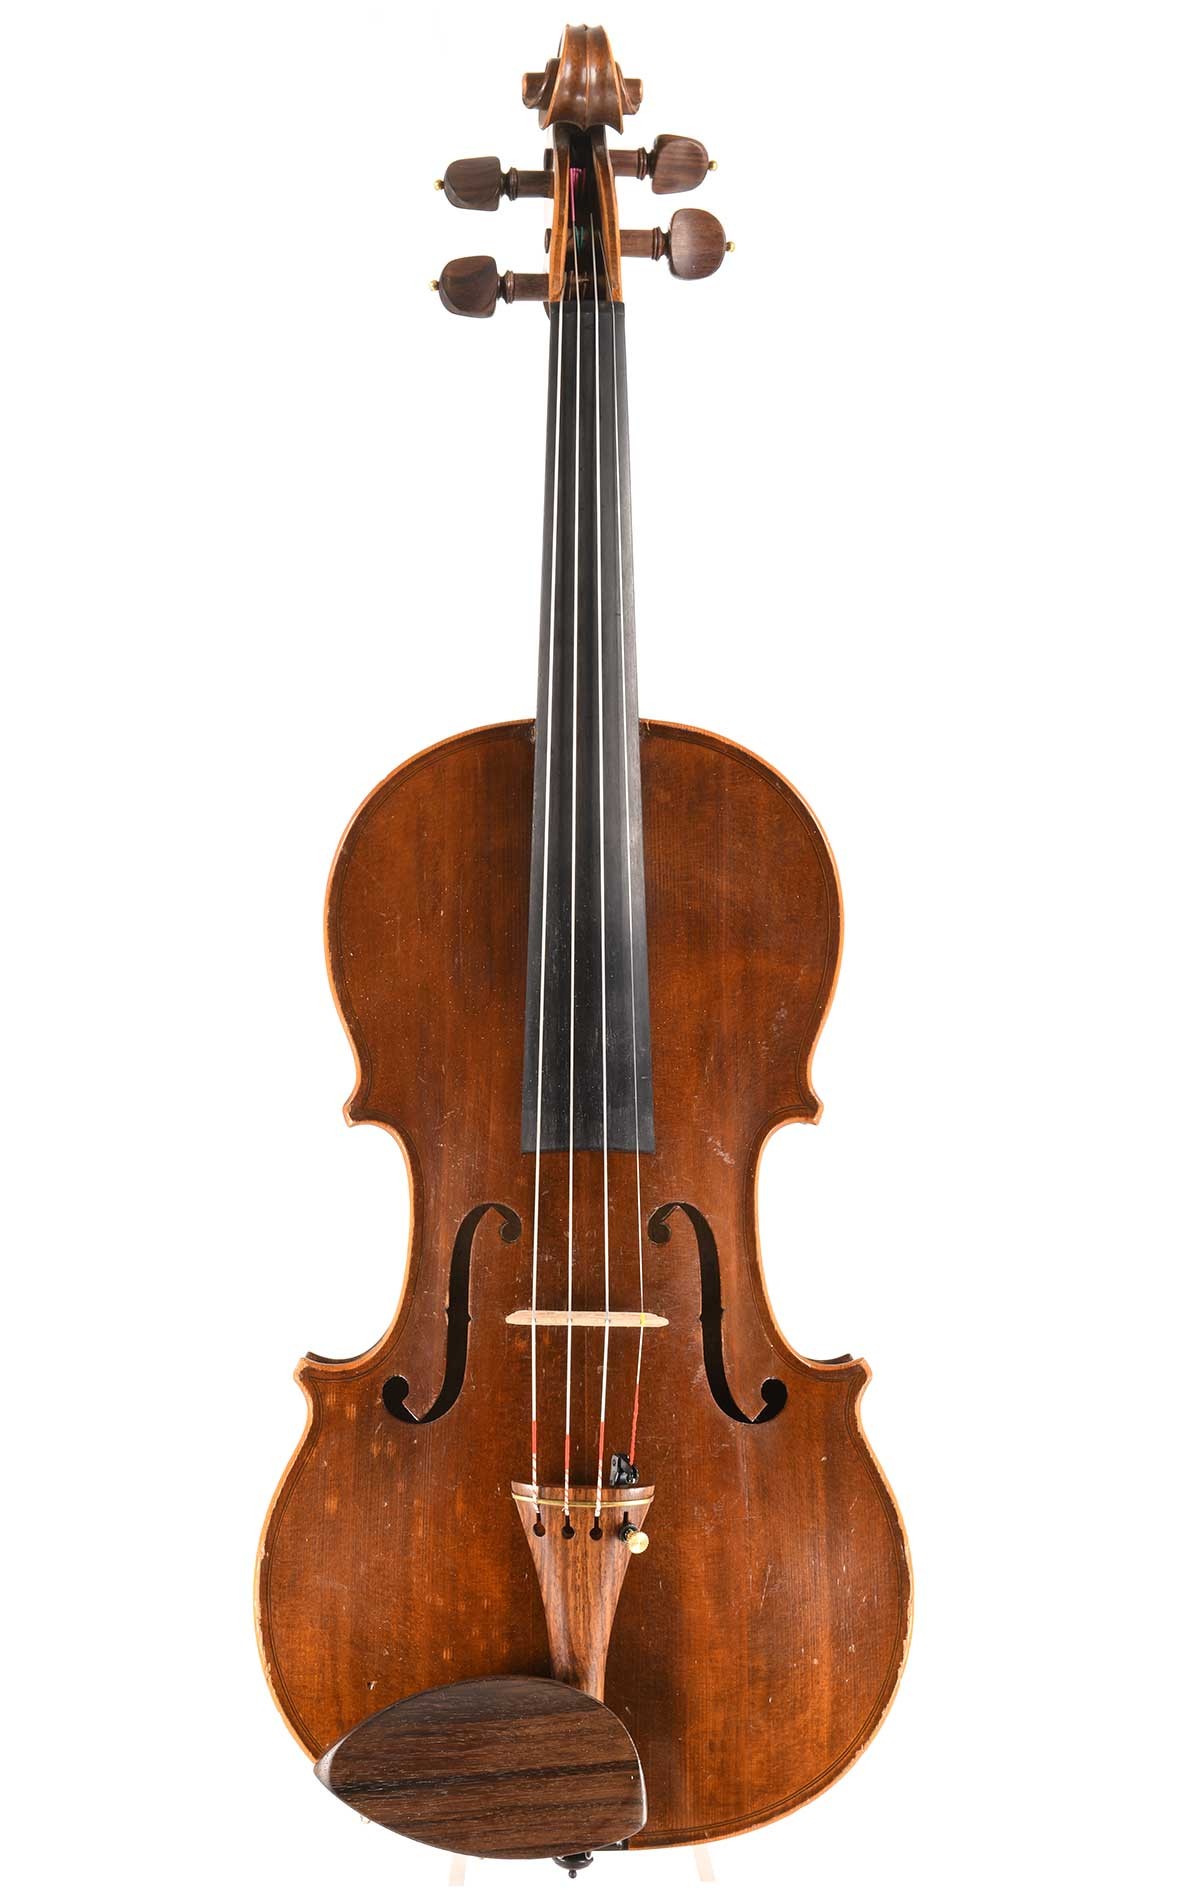 Antike Französische Geige gebaut um 1850 - guter, kräftiger Klang